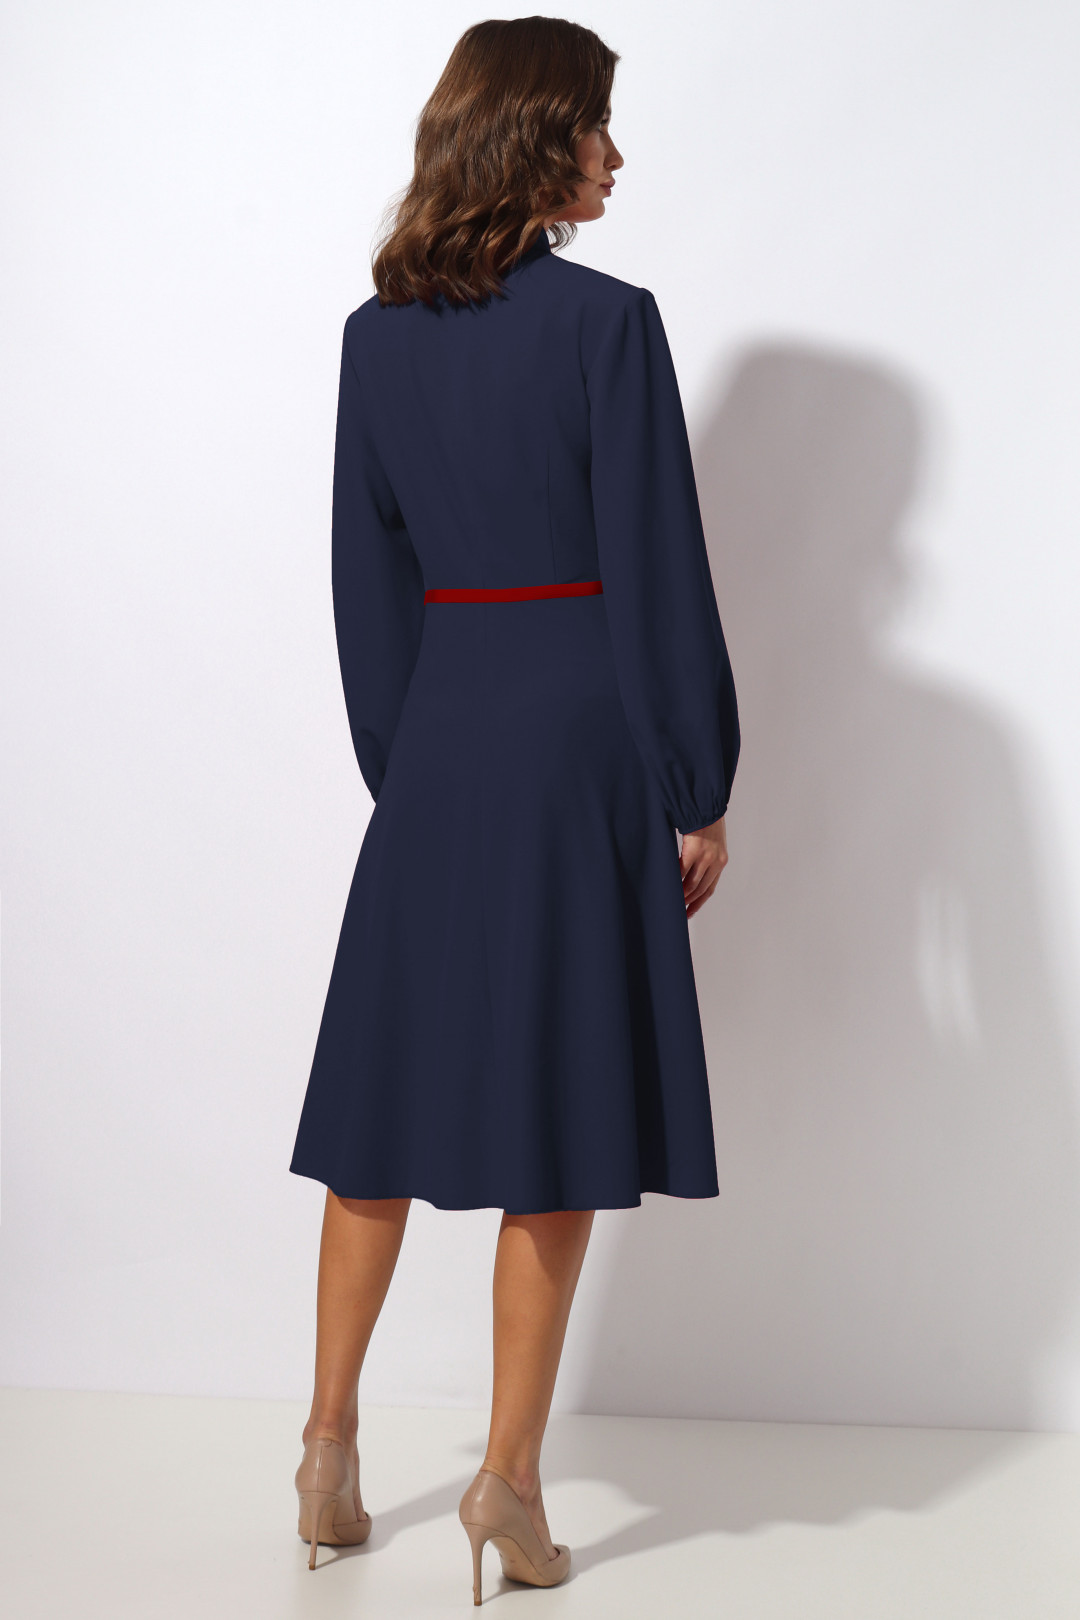 Платье МиА-Мода 1381-1 темно-синий